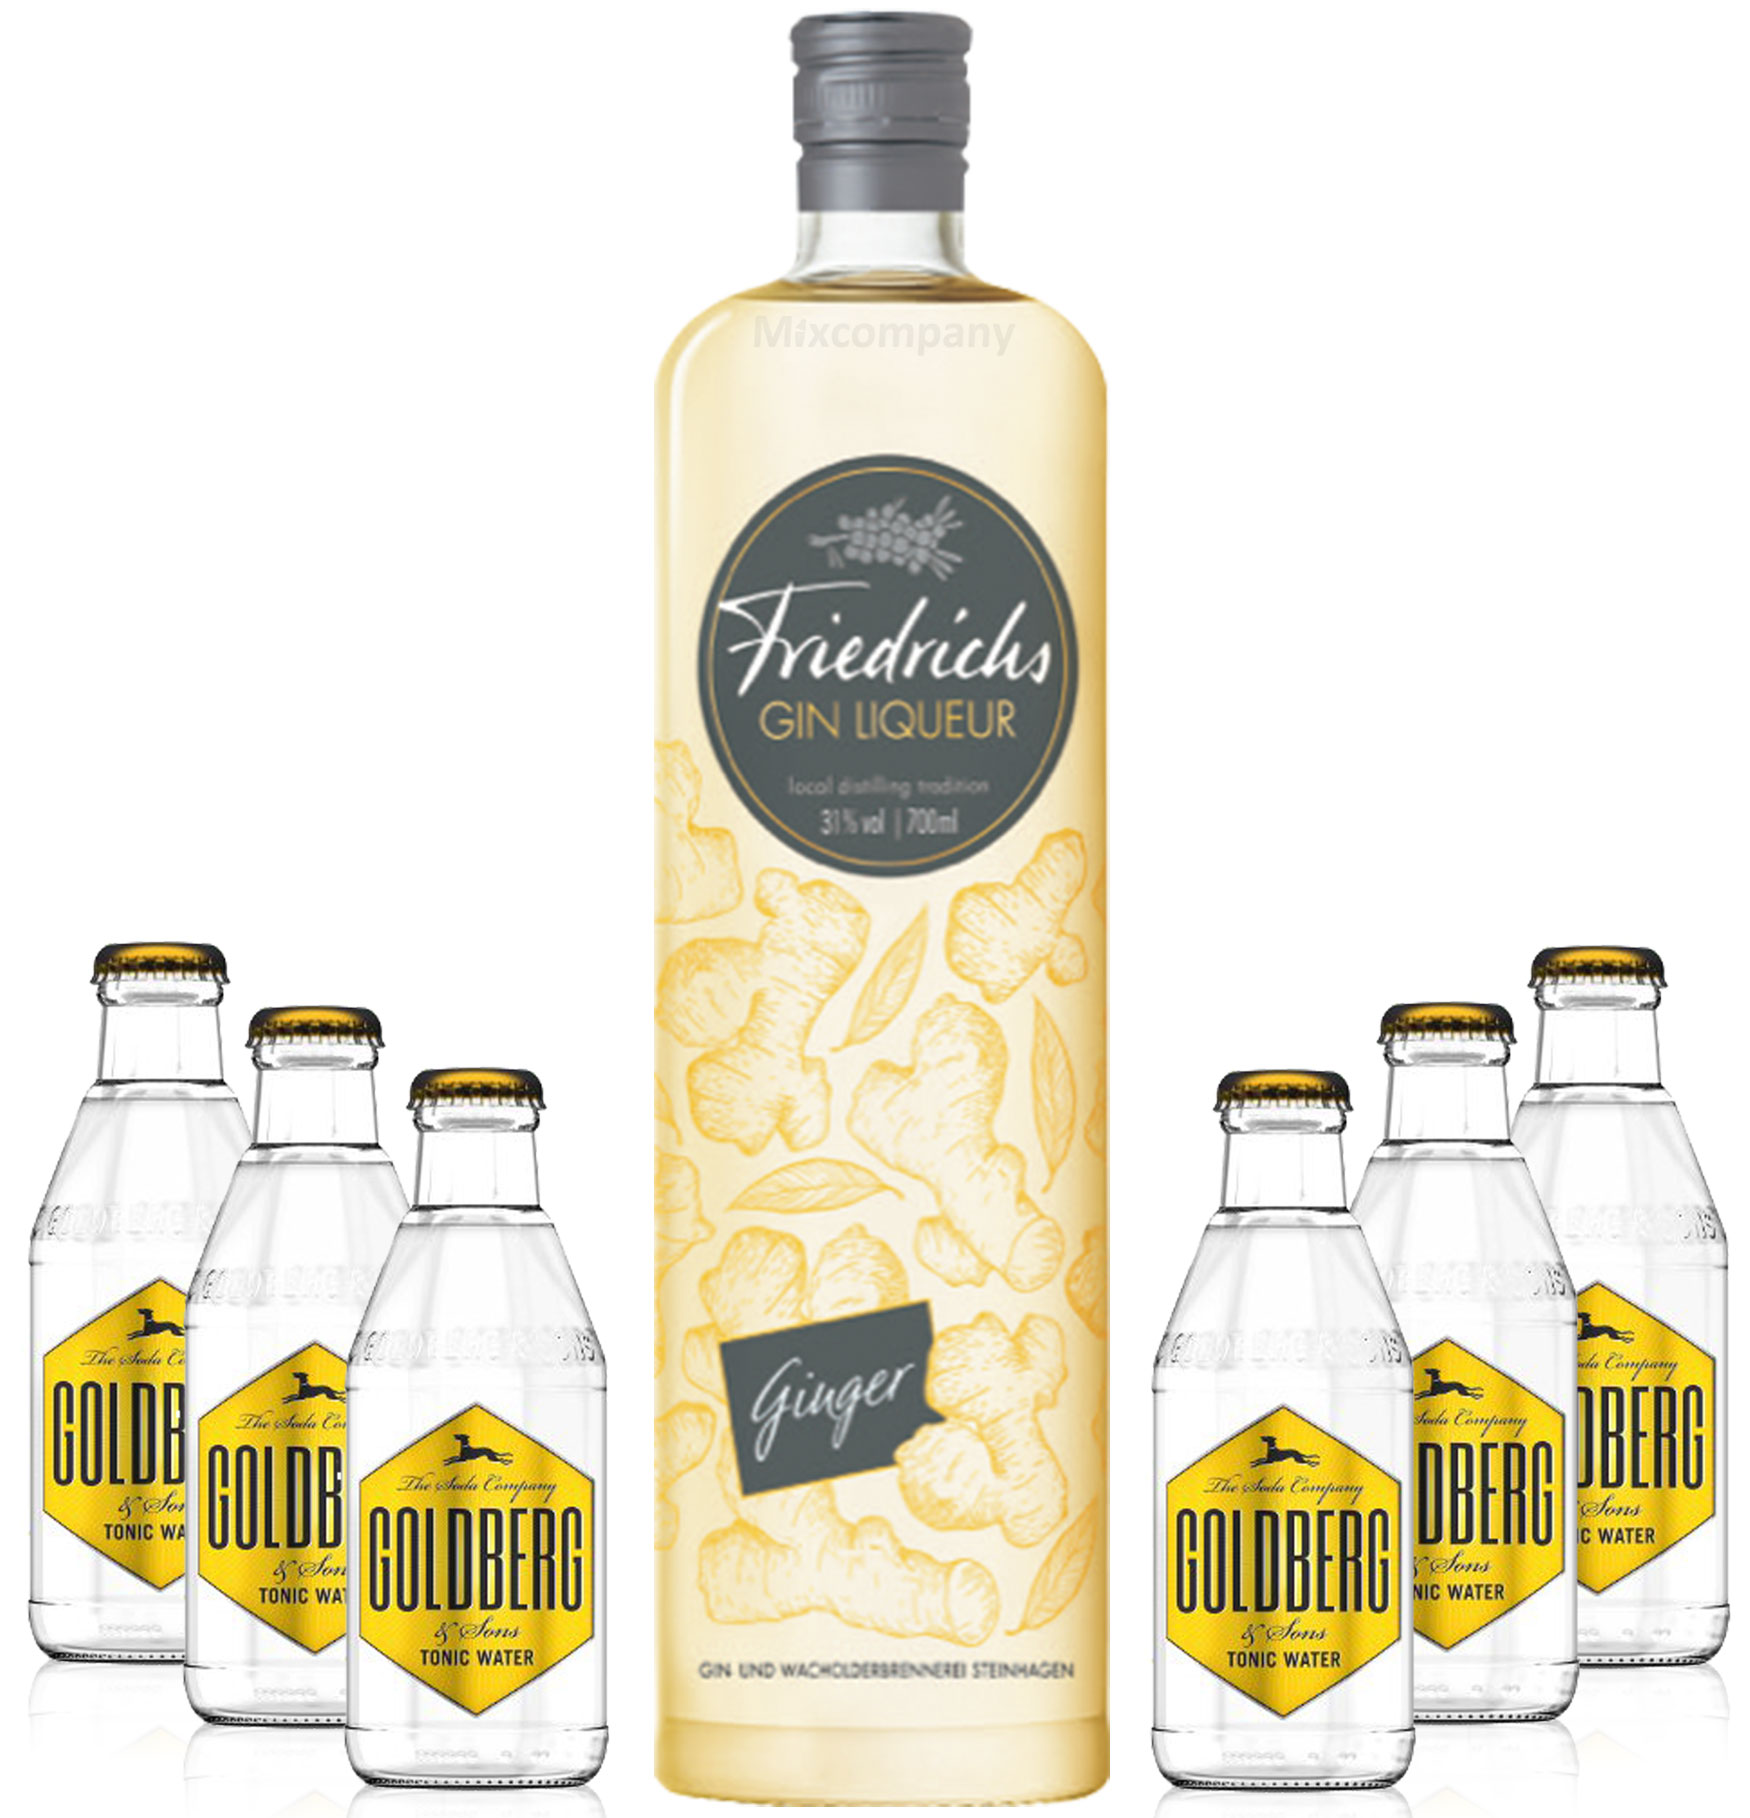 Friedrichs Gin Liqueur Ginger 0,7l 700ml (31% Vol) + 6x Goldberg Tonic Water 0,2l MEHRWEG inkl. Pfand Gin Tonic Bar- [Enthält Sulfite]